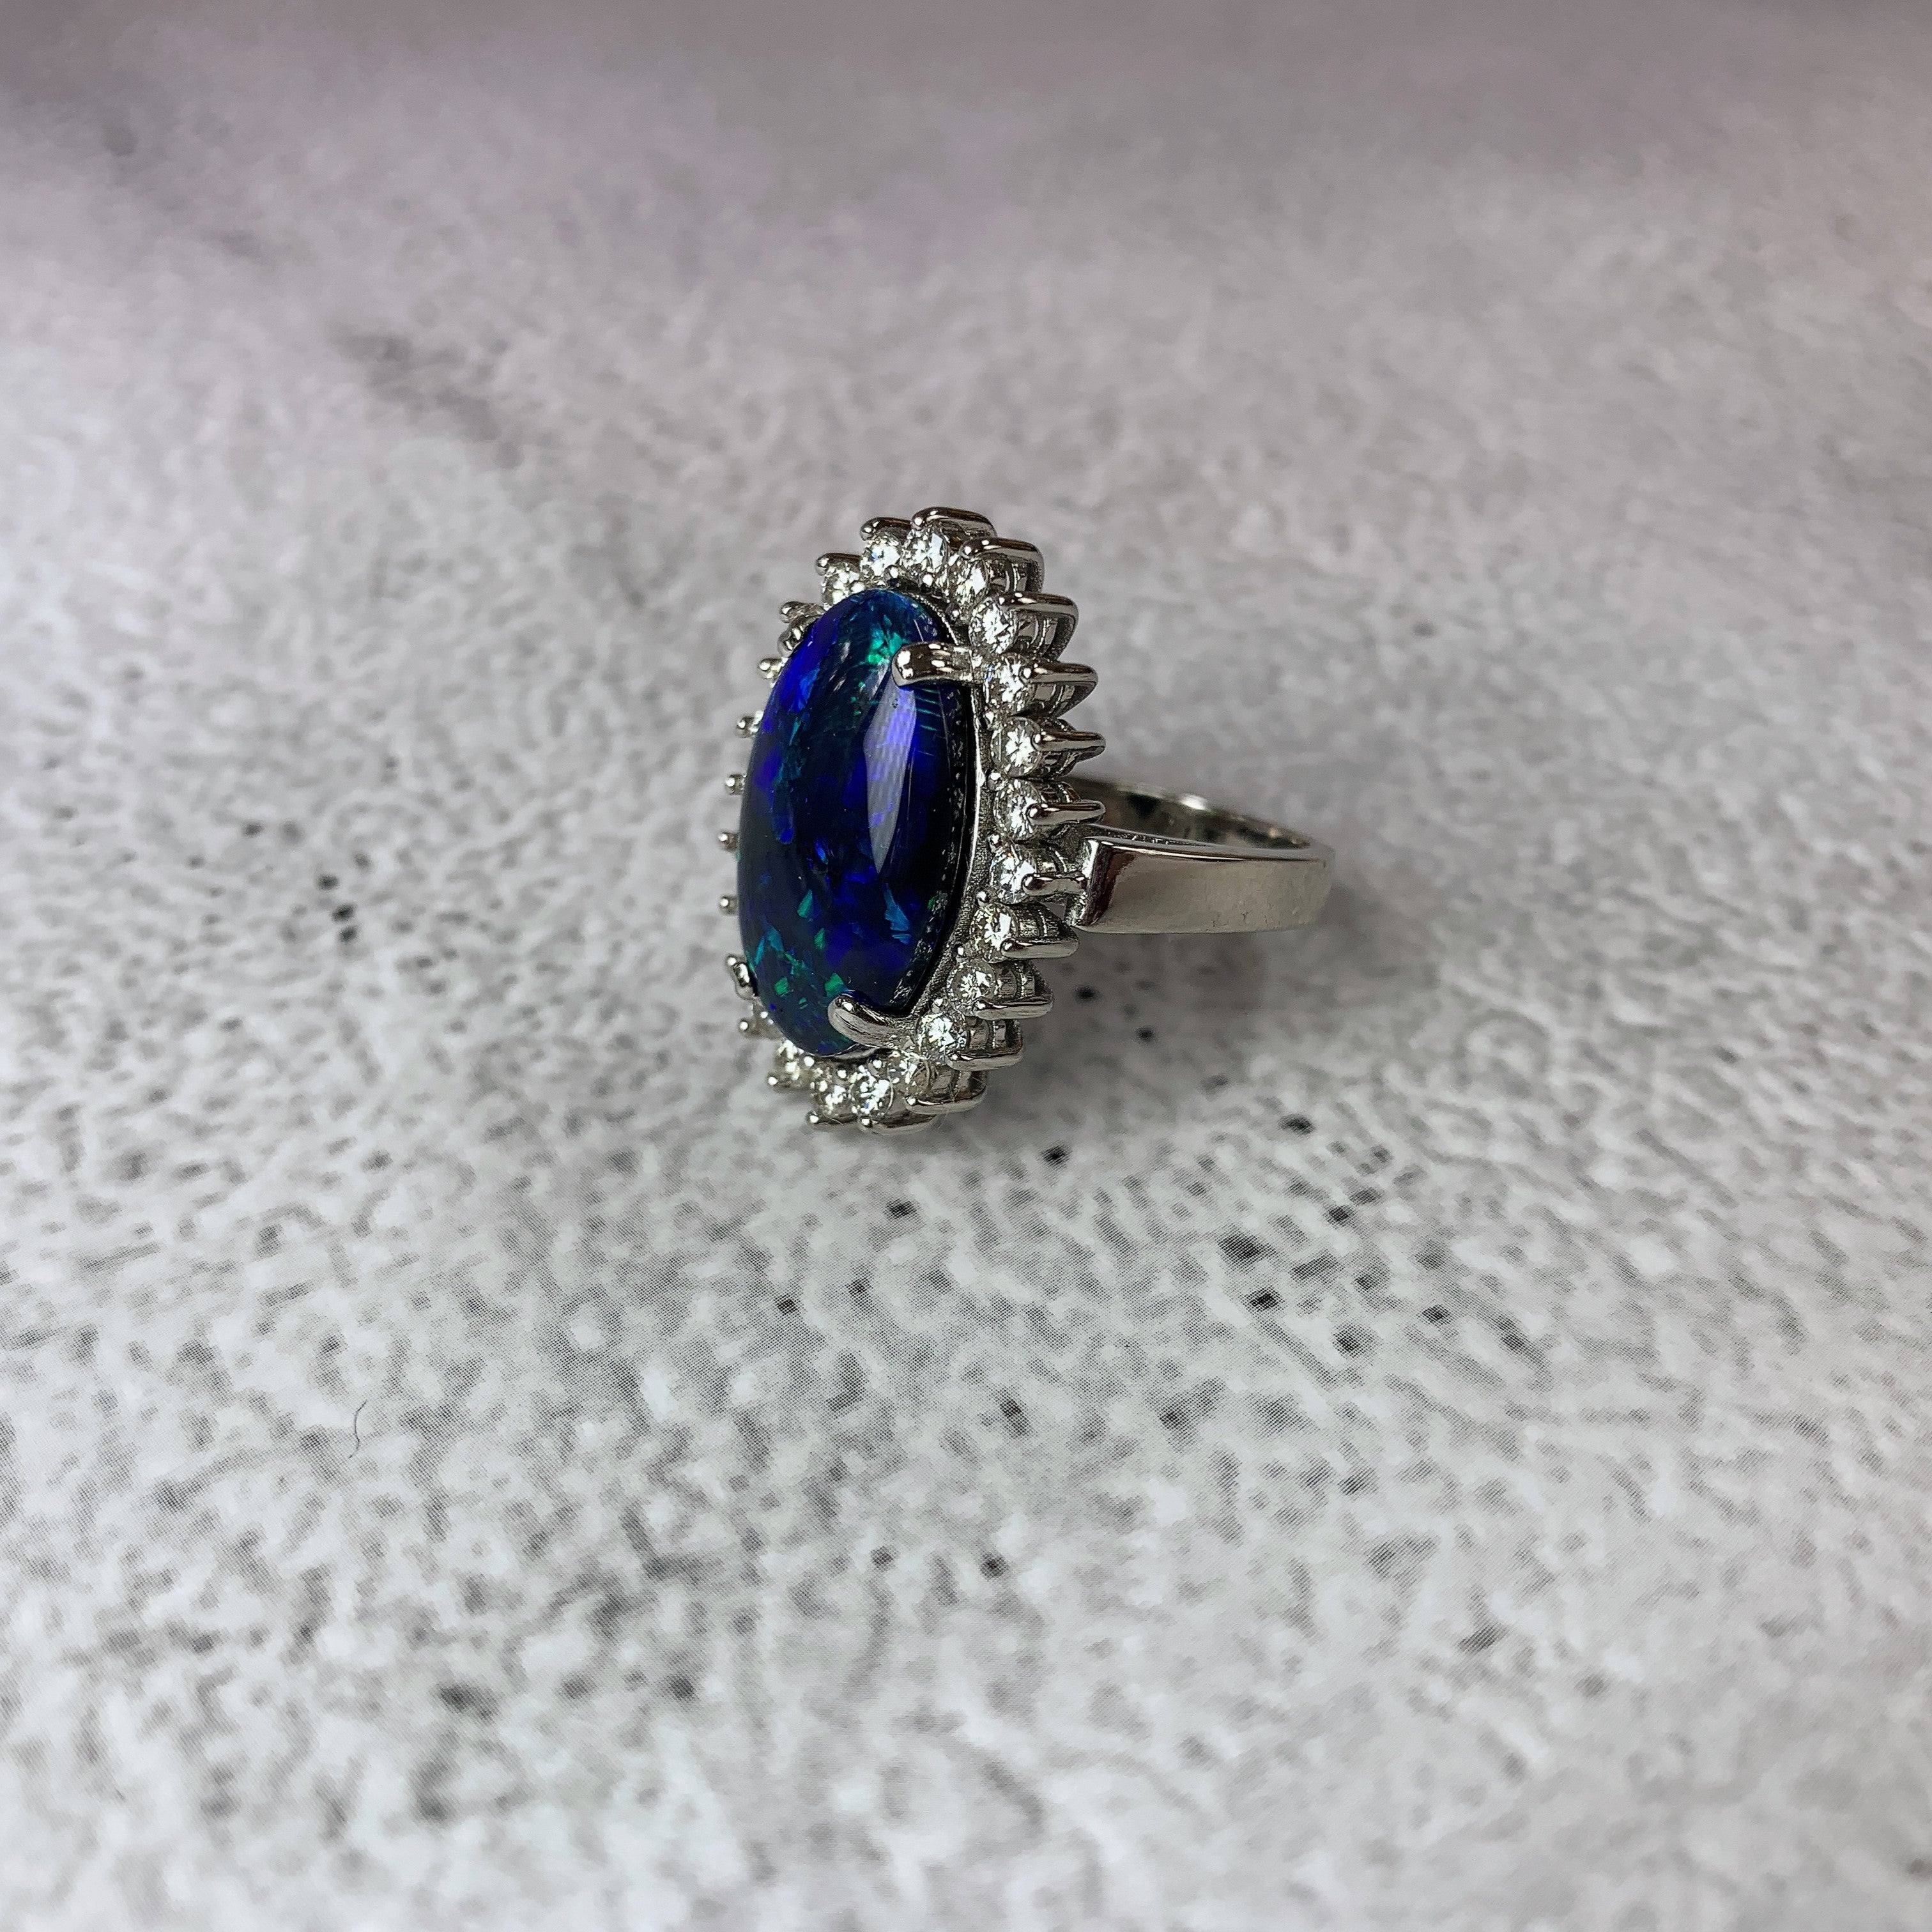 Platinum Cluster Black Opal and Diamond ring - Masterpiece Jewellery Opal & Gems Sydney Australia | Online Shop